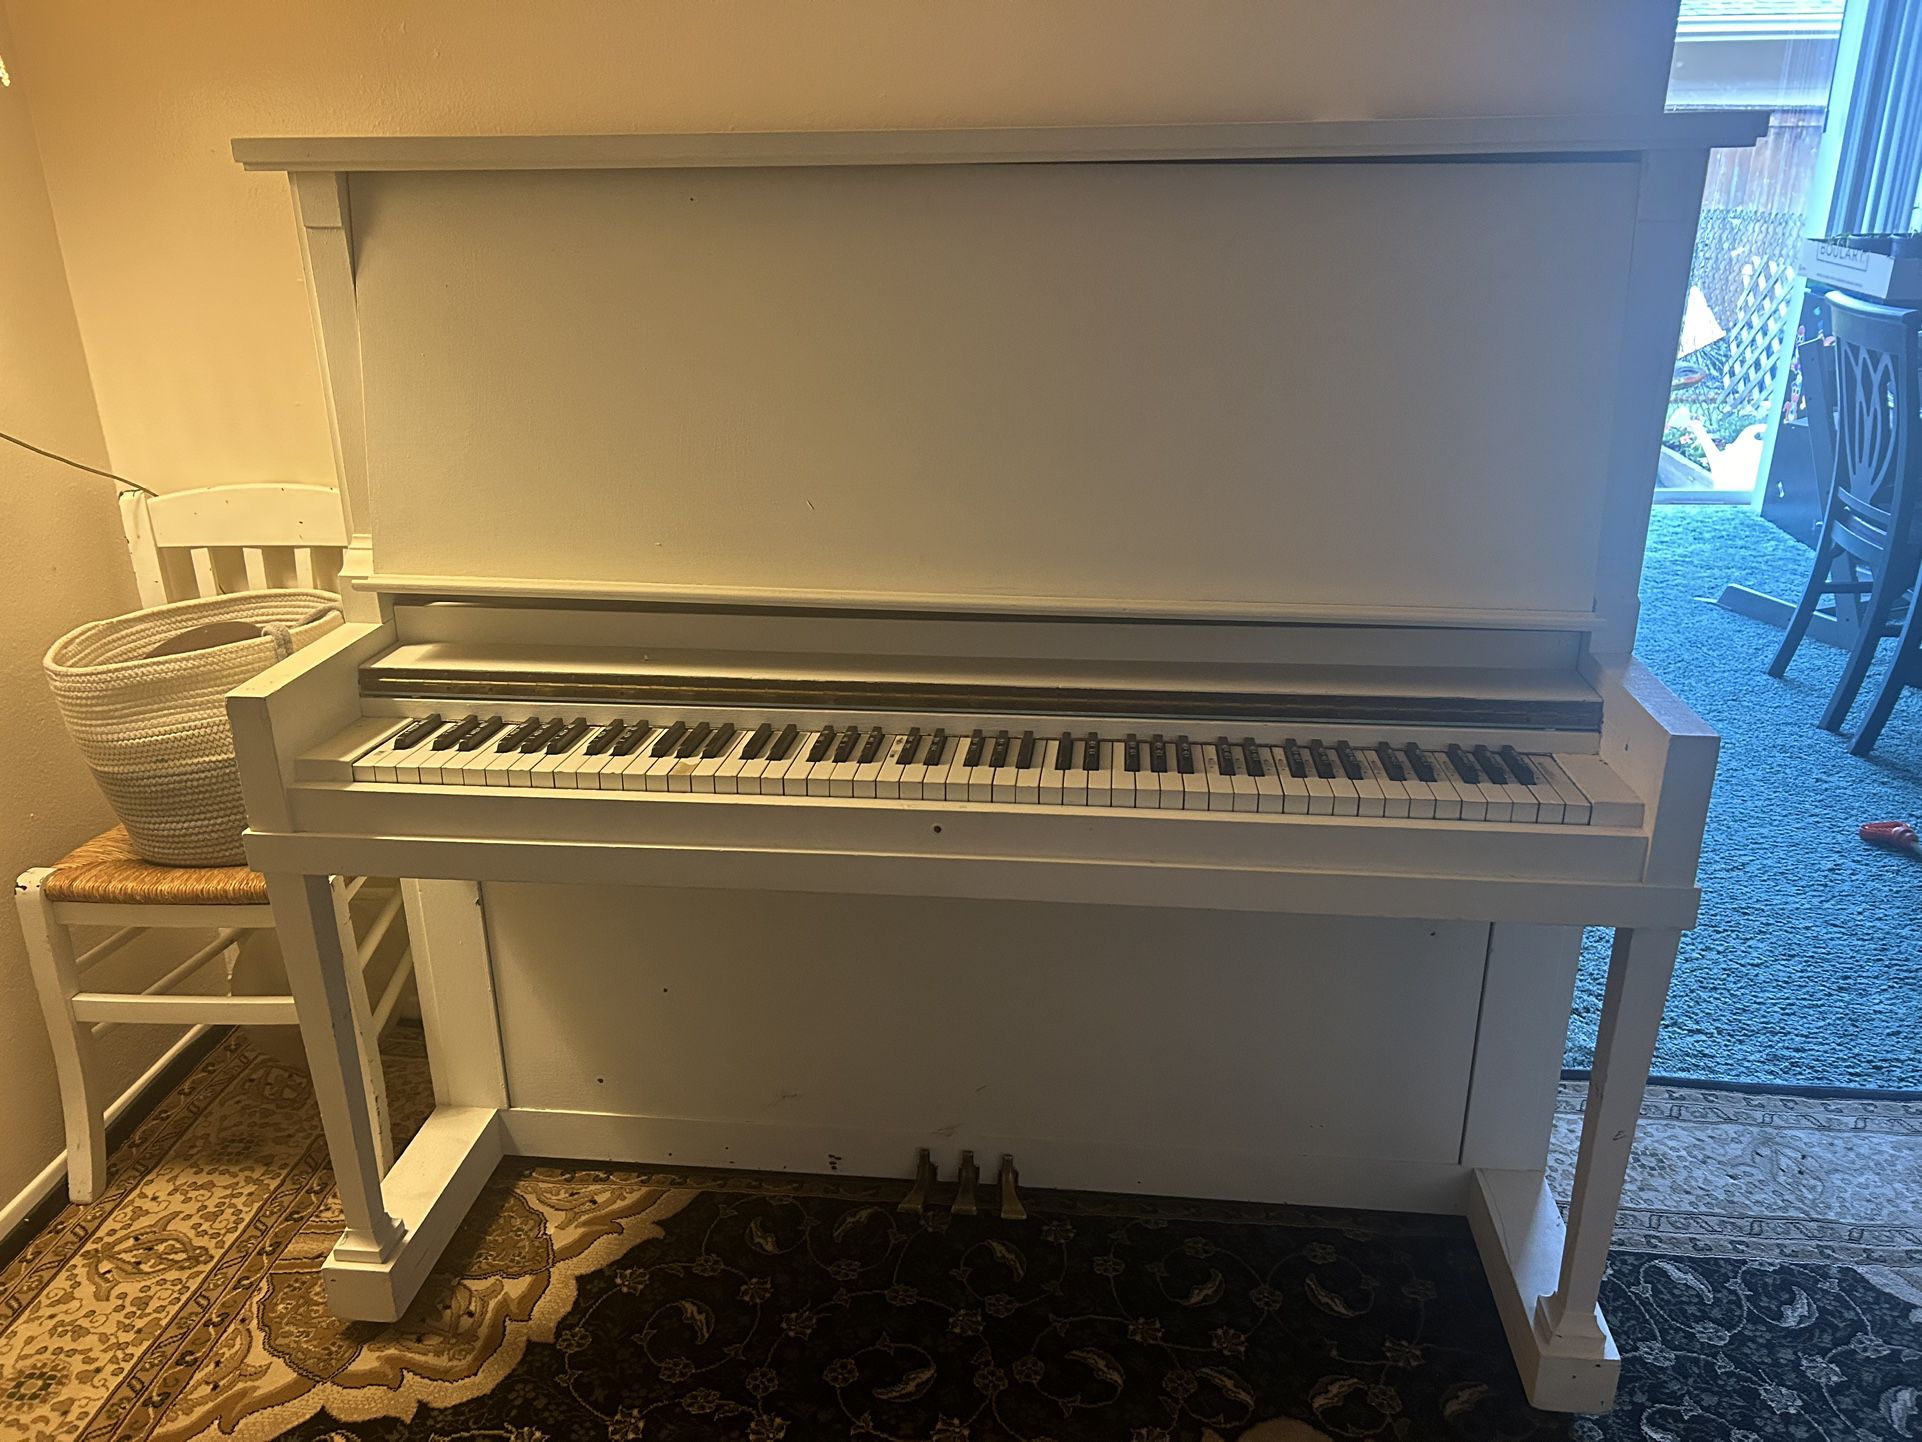 Free Upright Piano